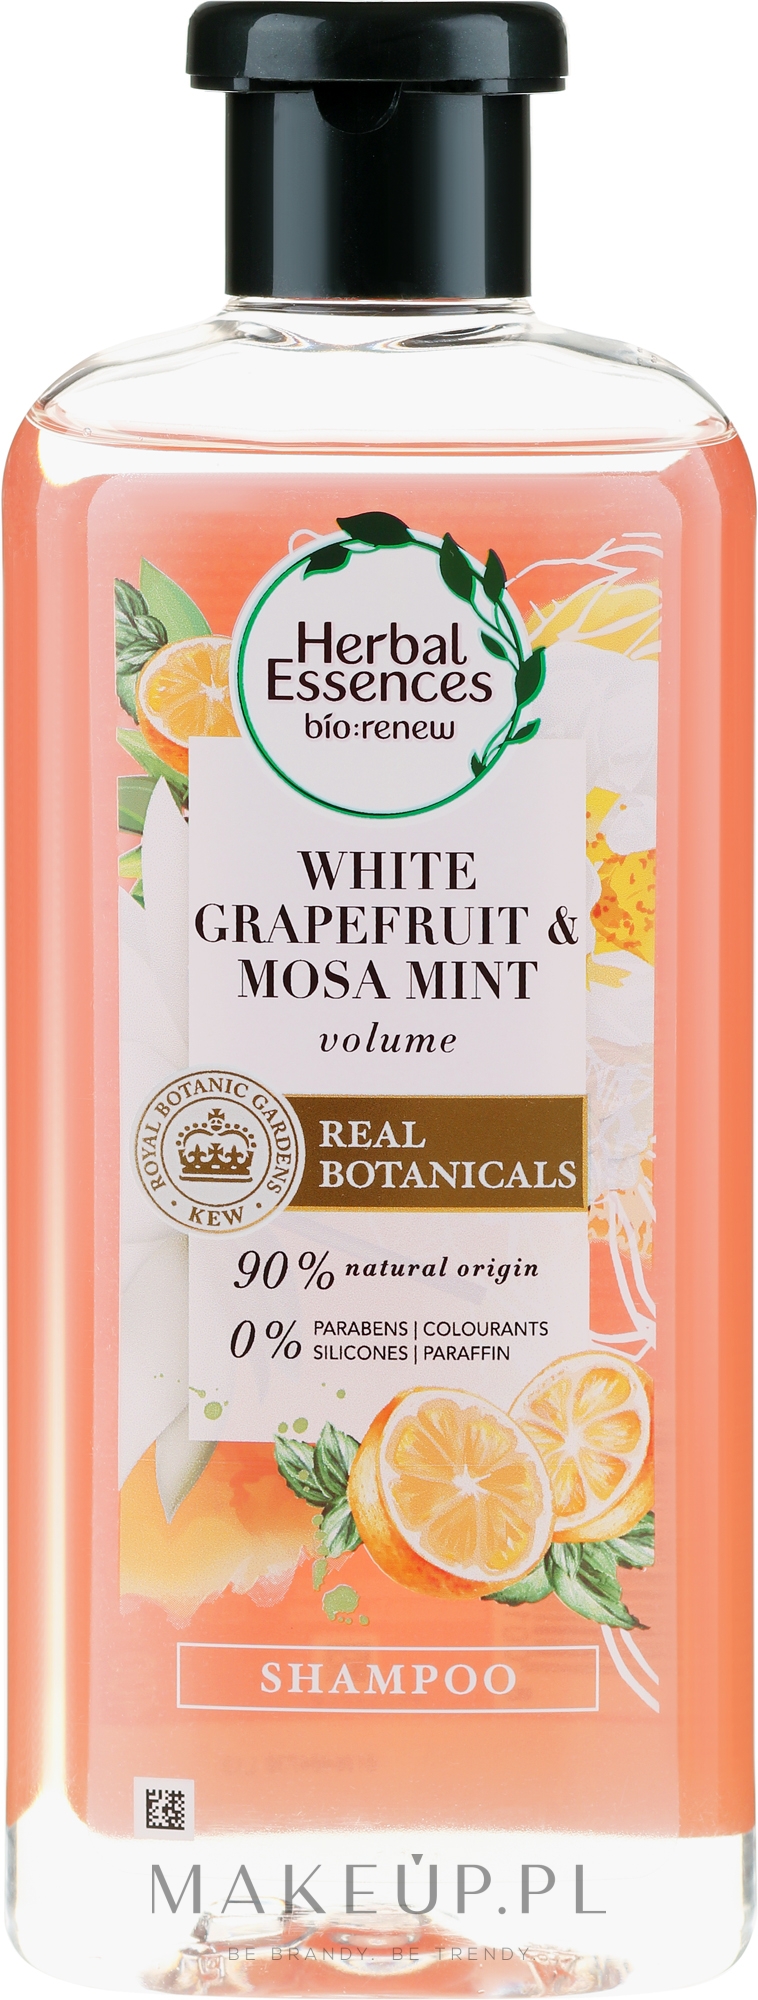 herbal essences szampon grapefruit and mint opinie